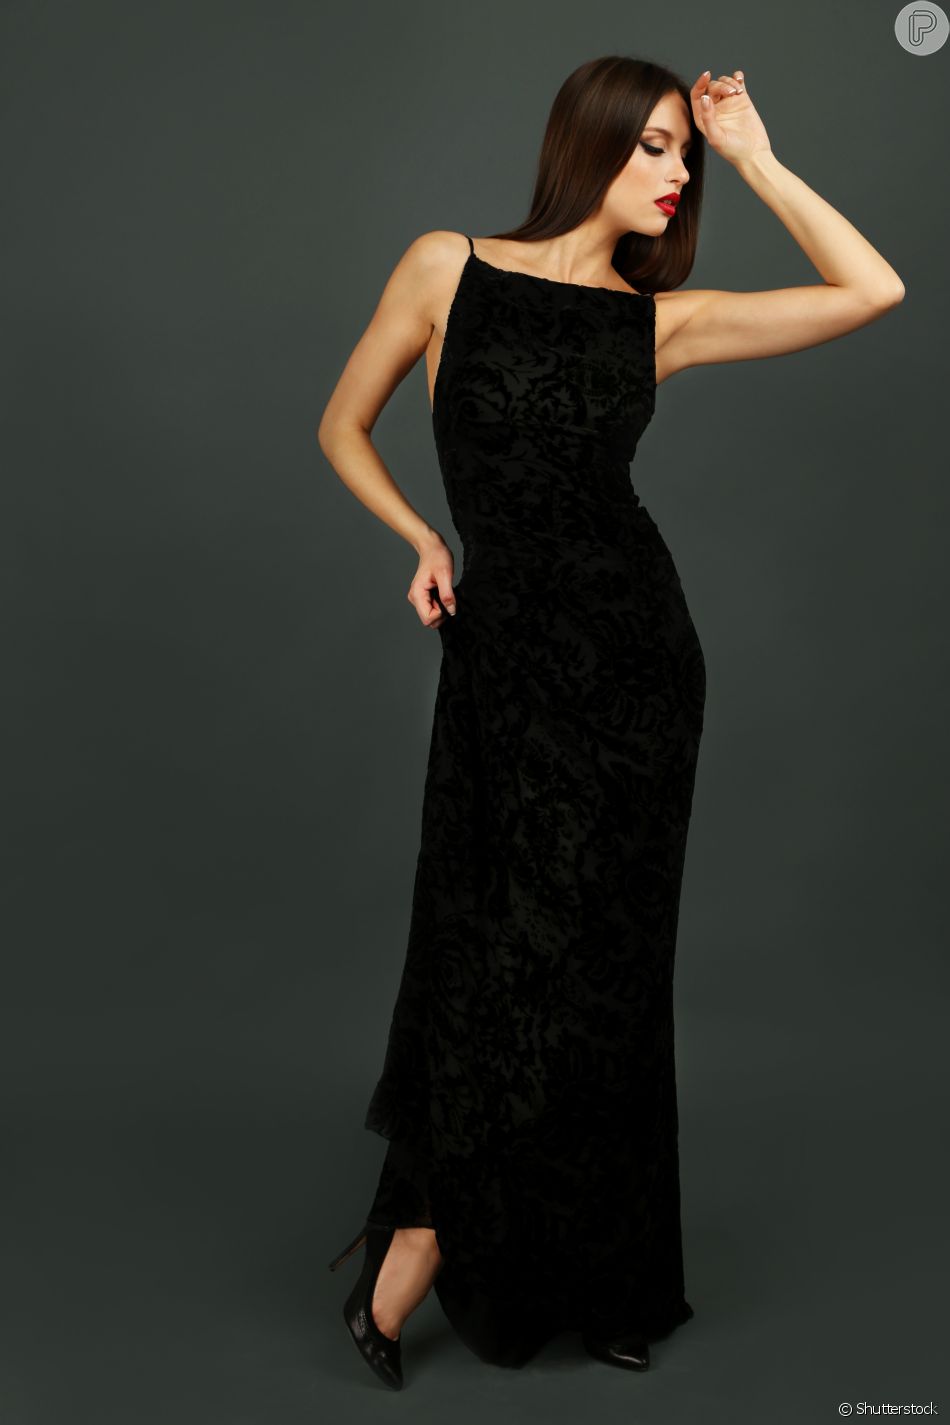 modelos de vestido preto longo